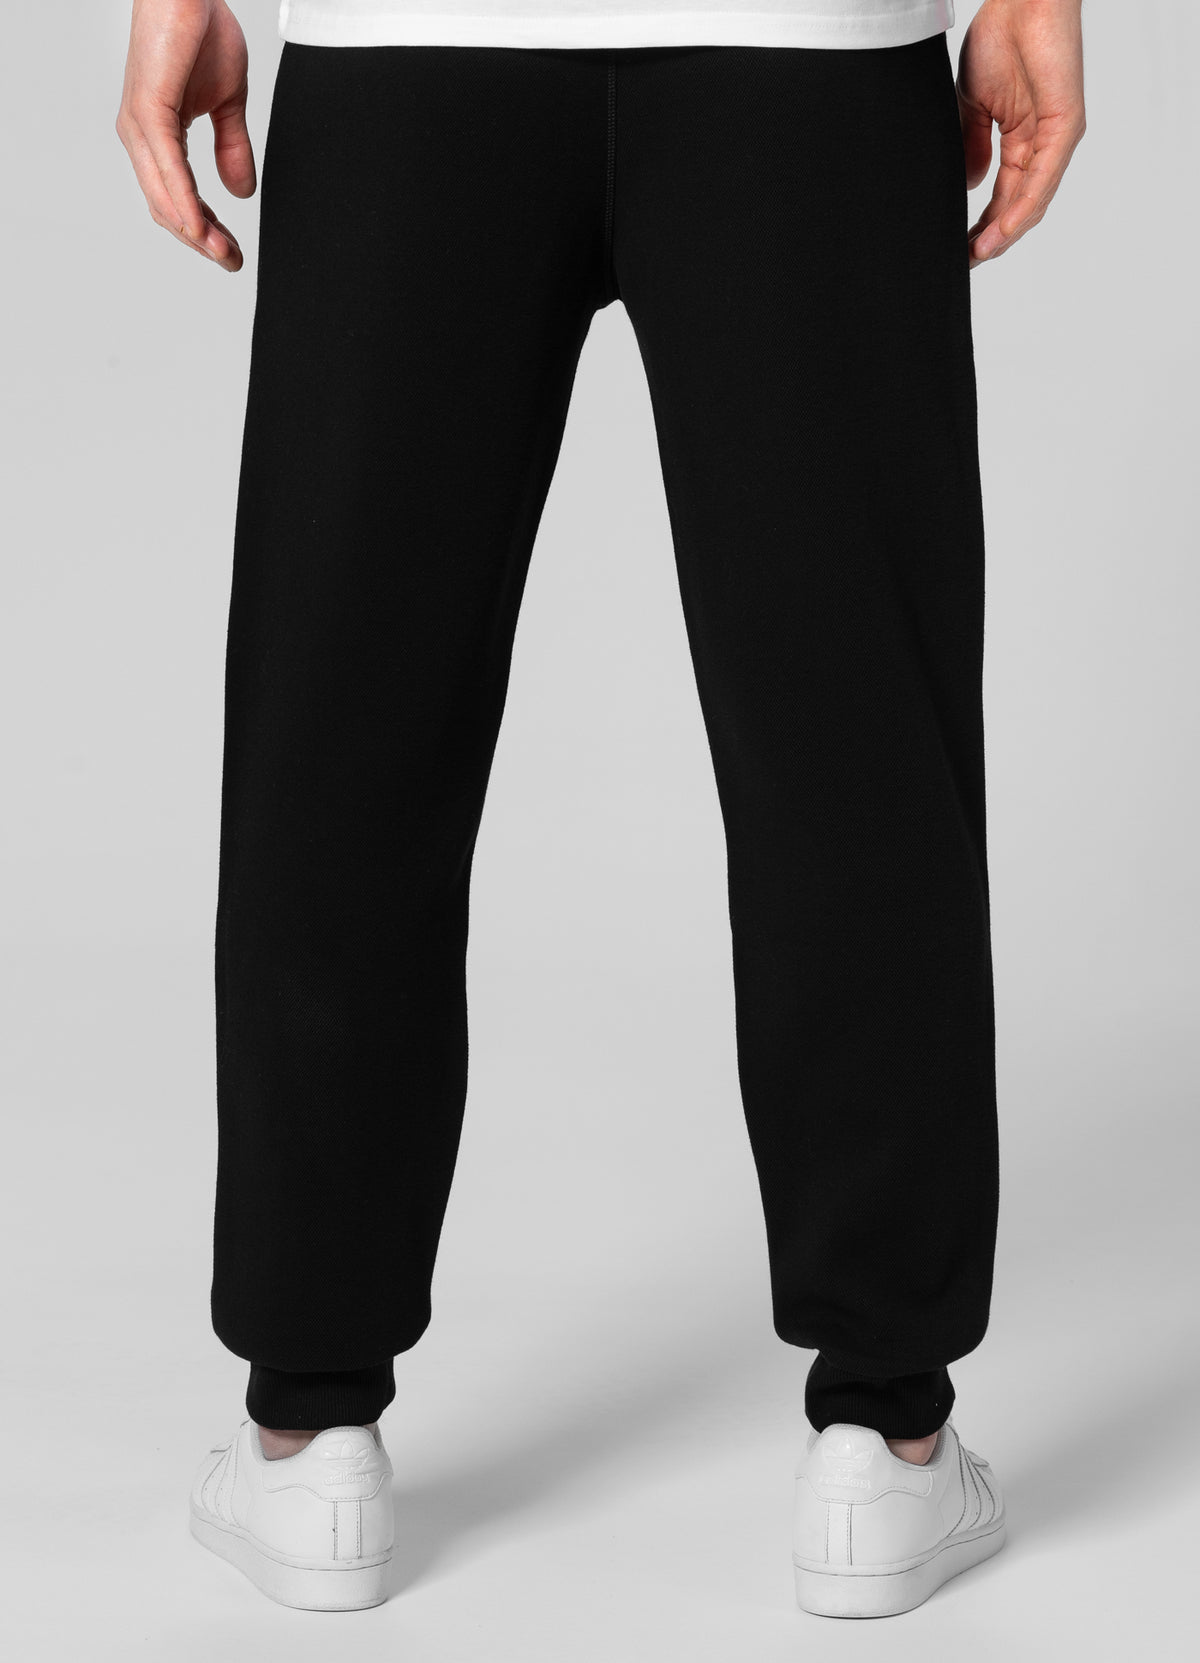 NEW LOGO Premium Pique Black Track Pants